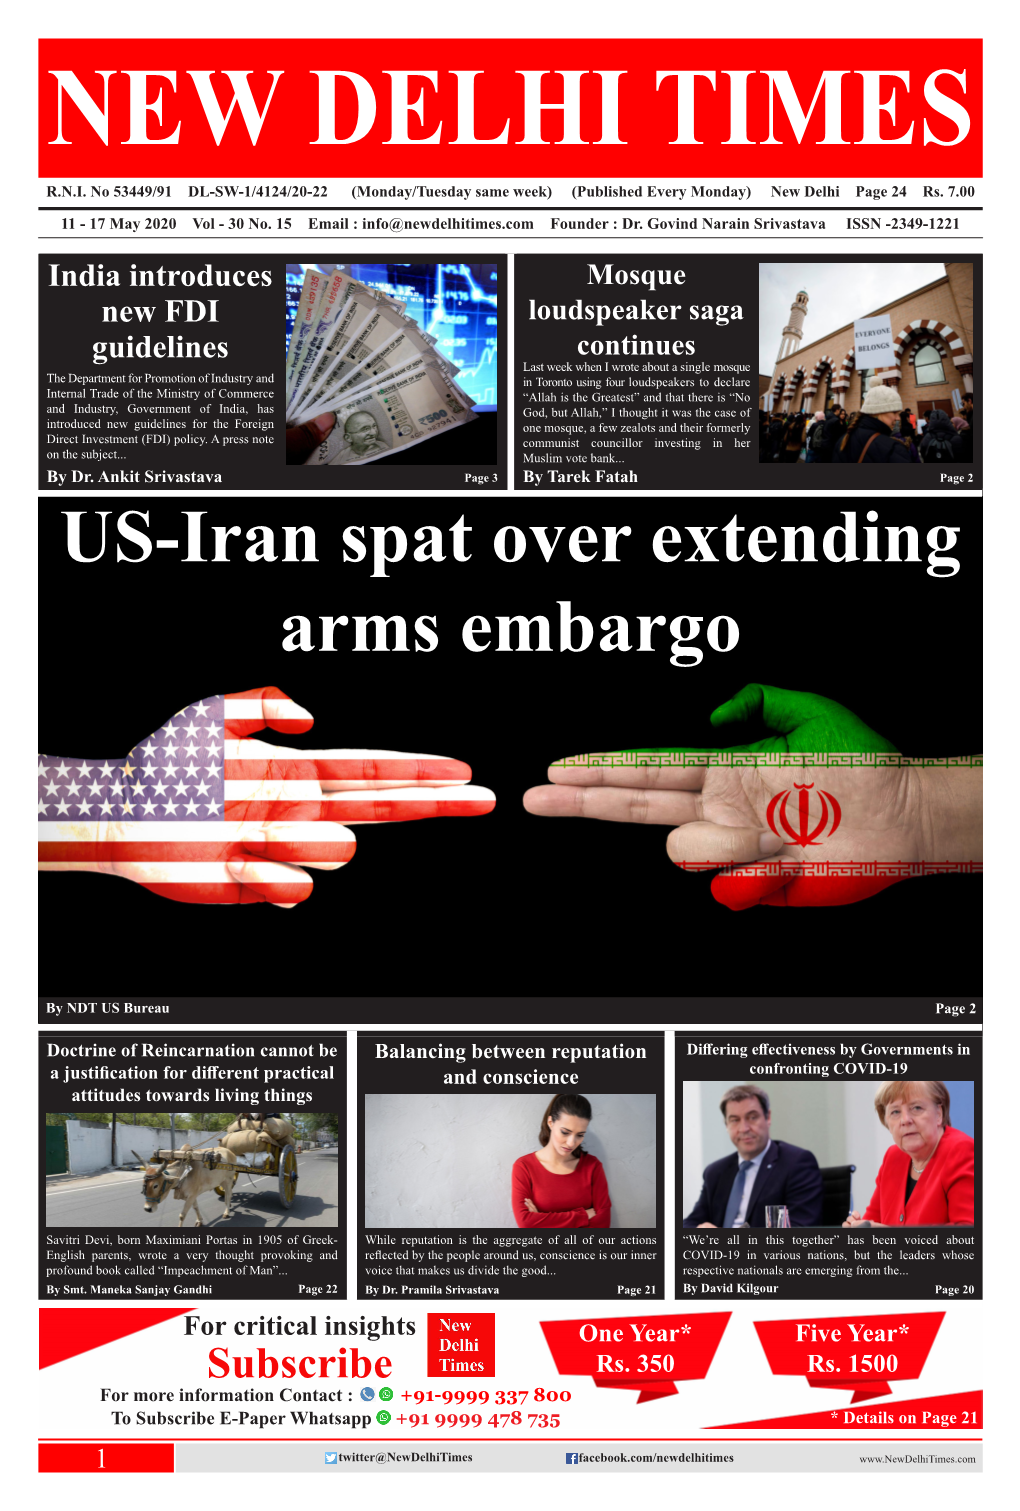 US-Iran Spat Over Extending Arms Embargo